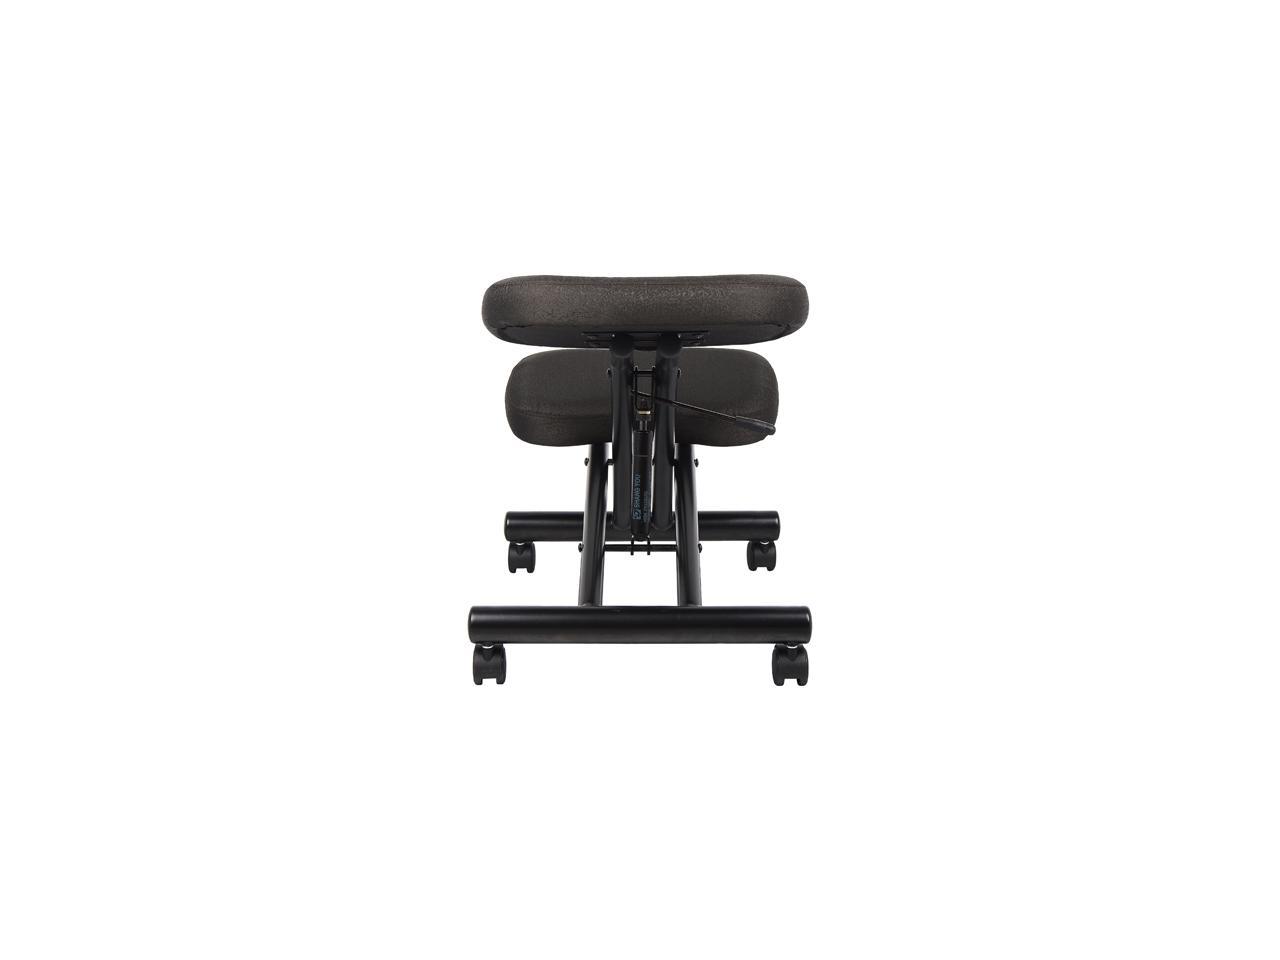 Boss Office Products Black Fabric Ergonomic Kneeling Stool - image 3 of 5